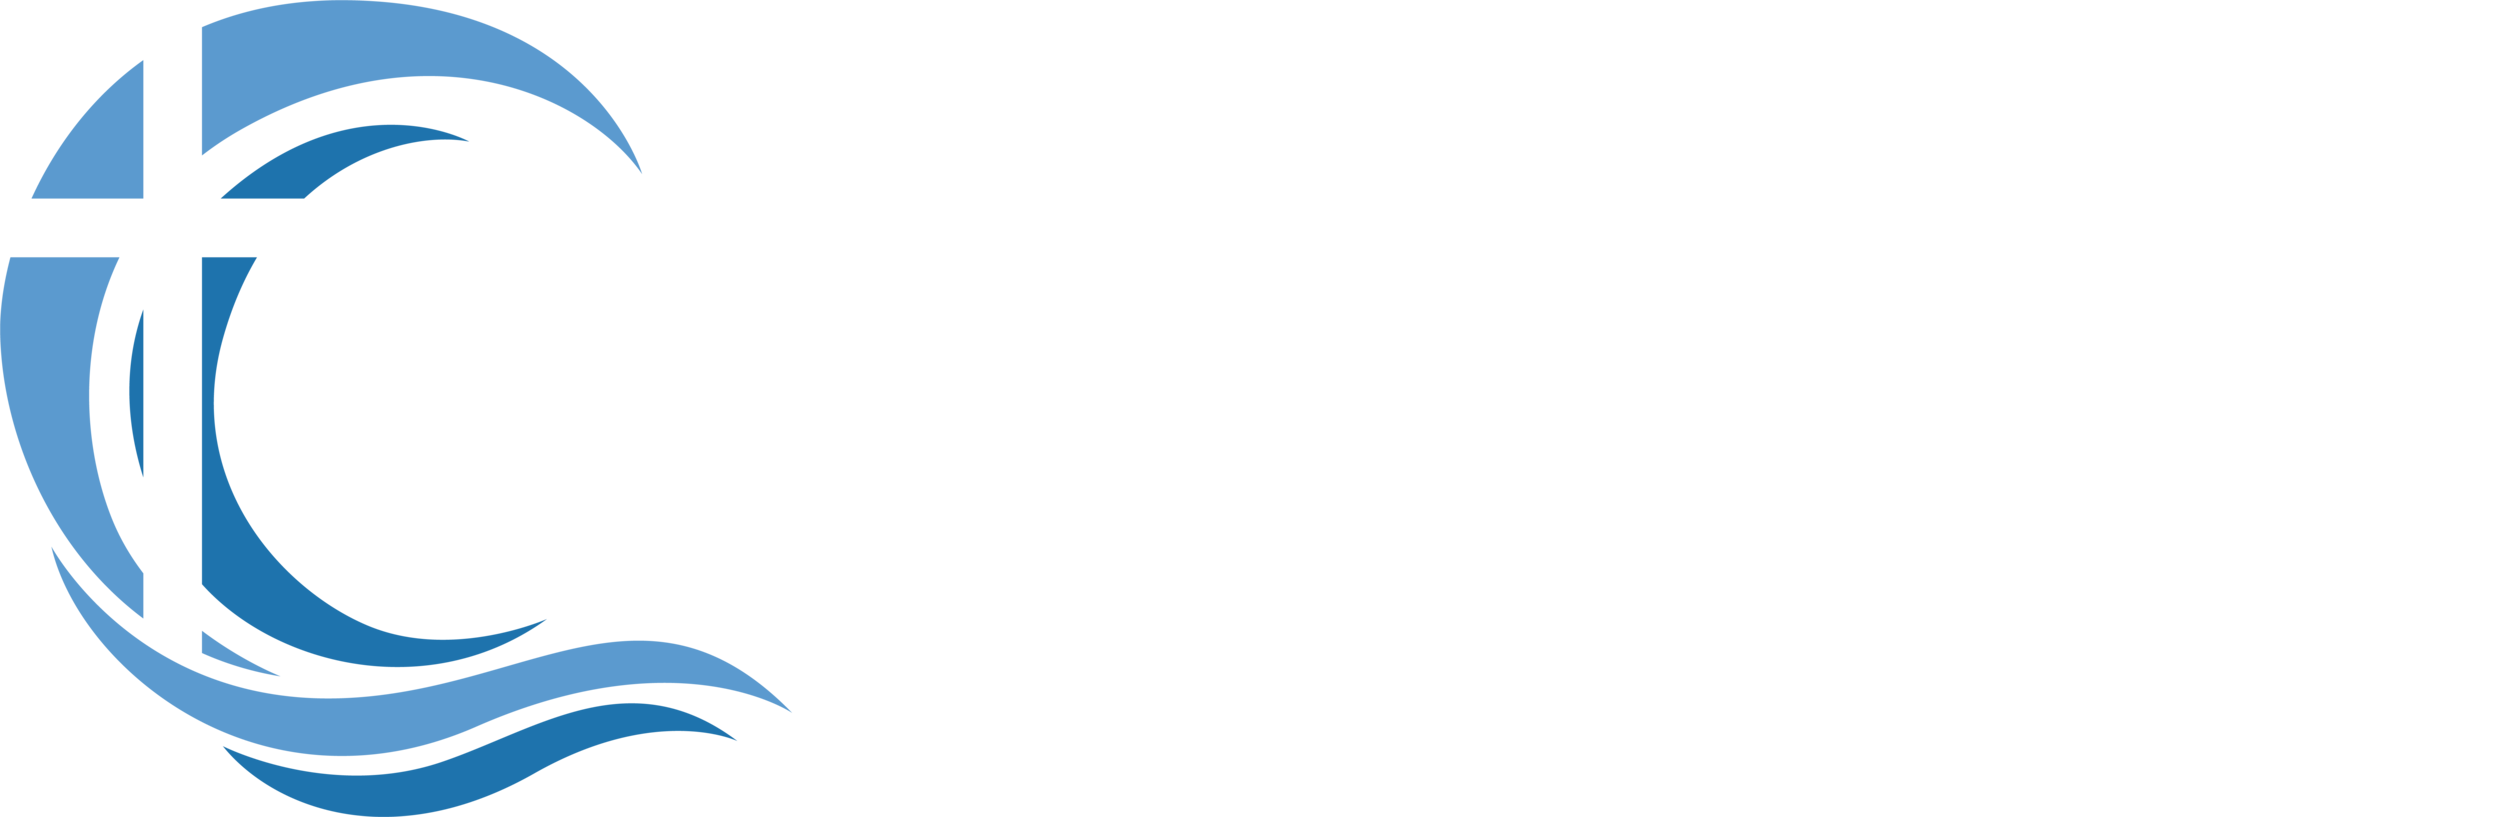 Community Bible Fellowship